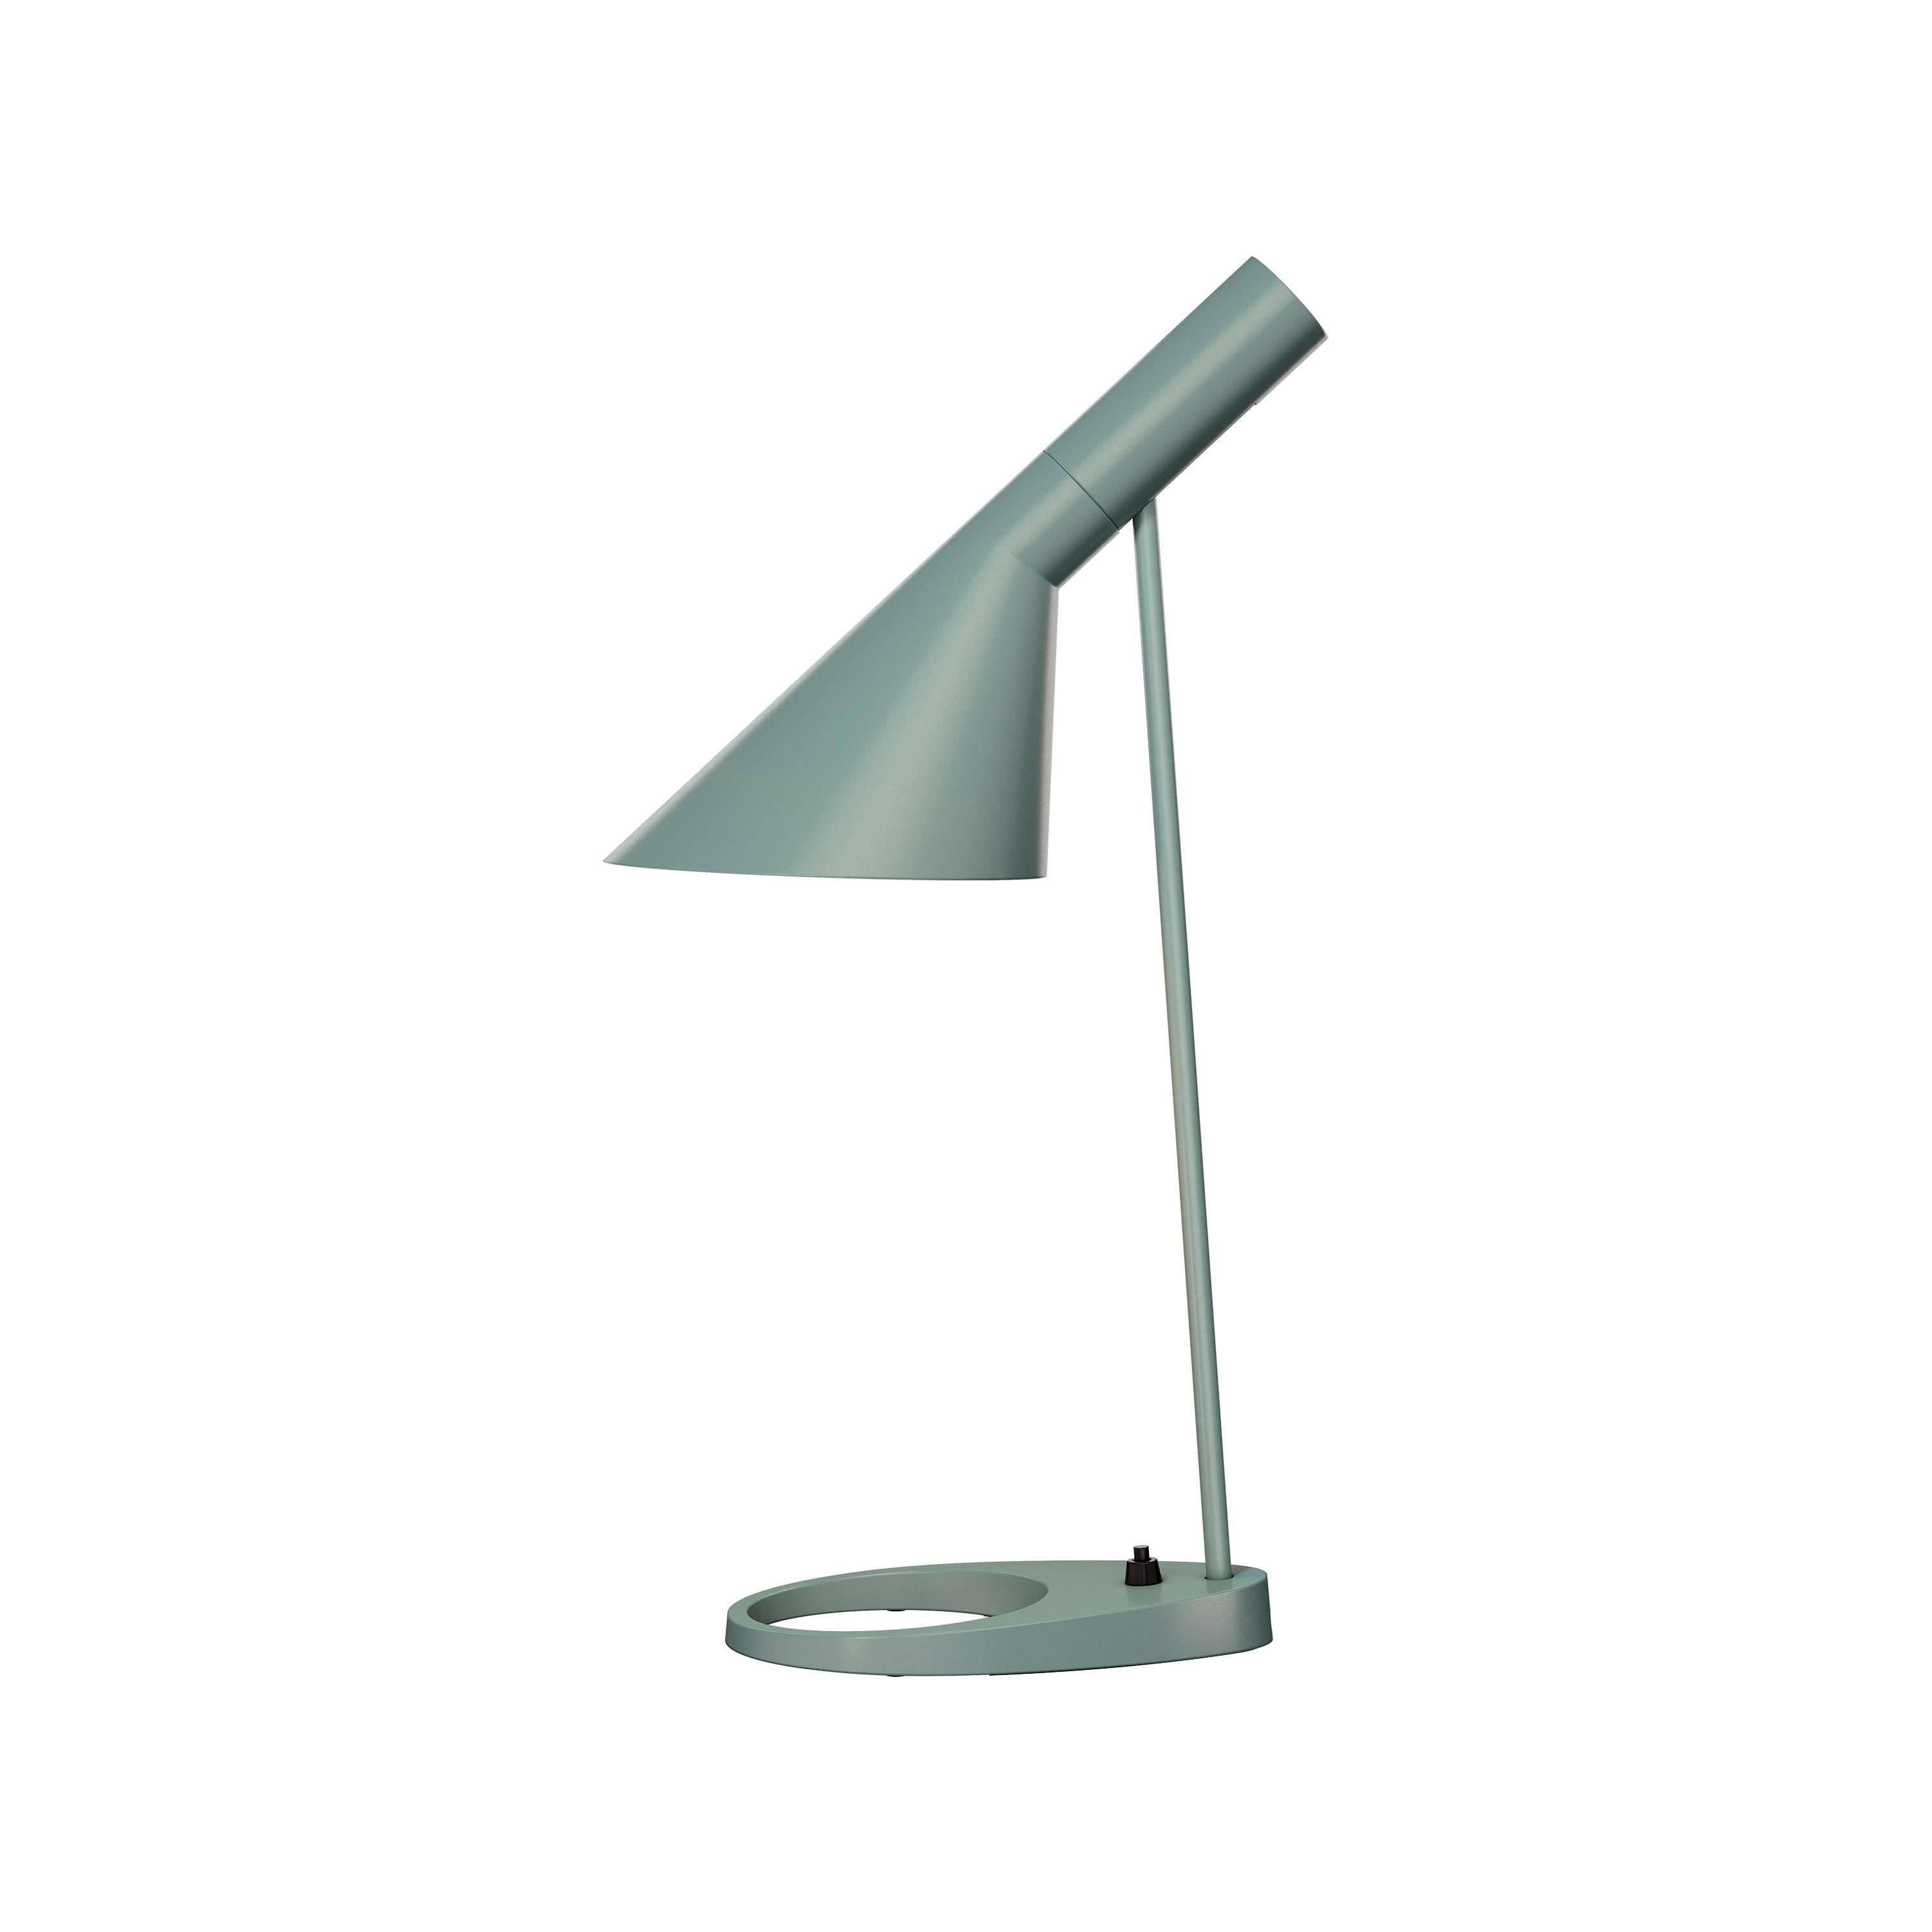 Painted Arne Jacobsen AJ Table Lamp in White for Louis Poulsen For Sale